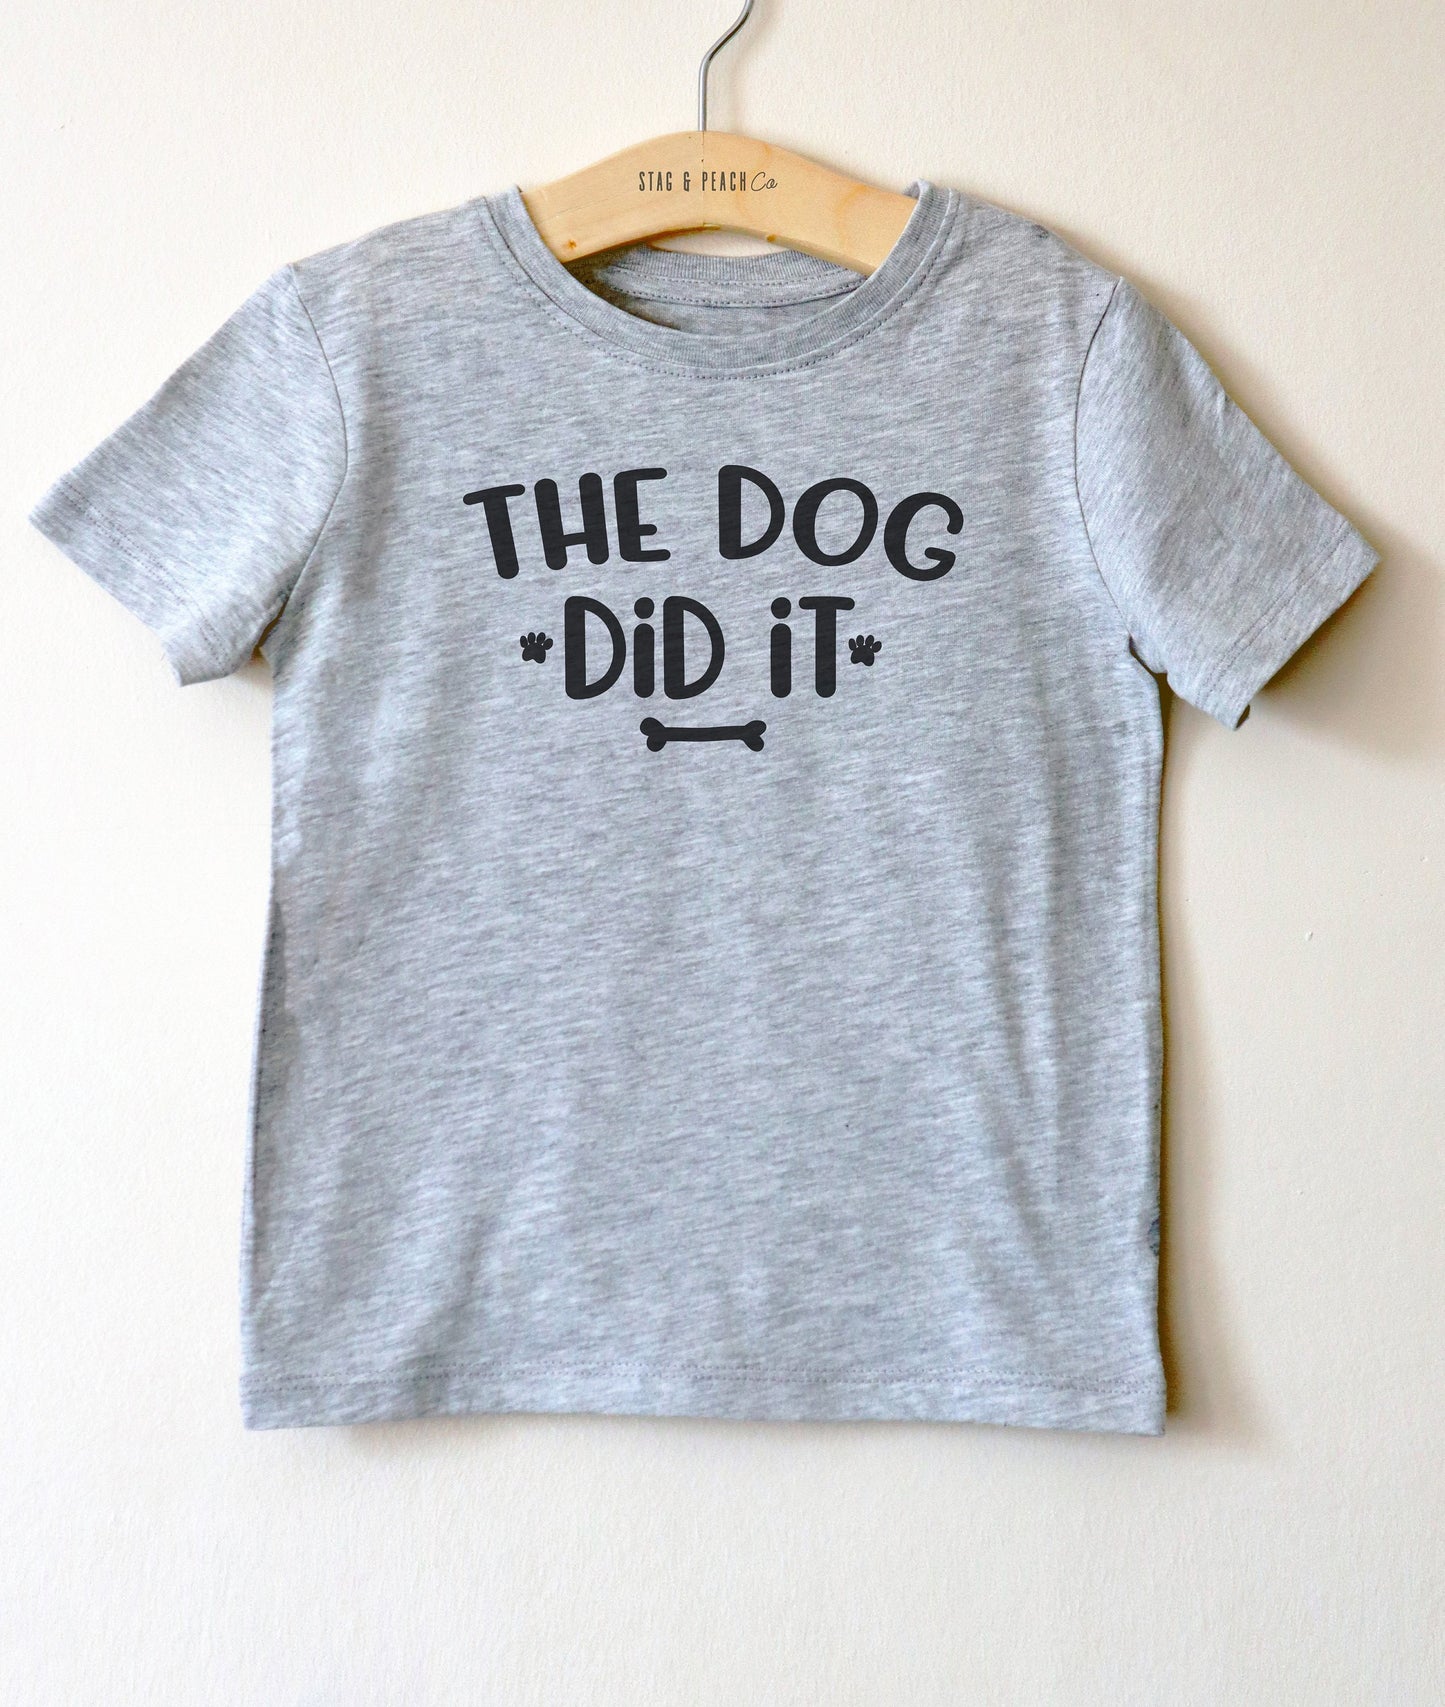 The Dog Did It Kids Shirt - Dog